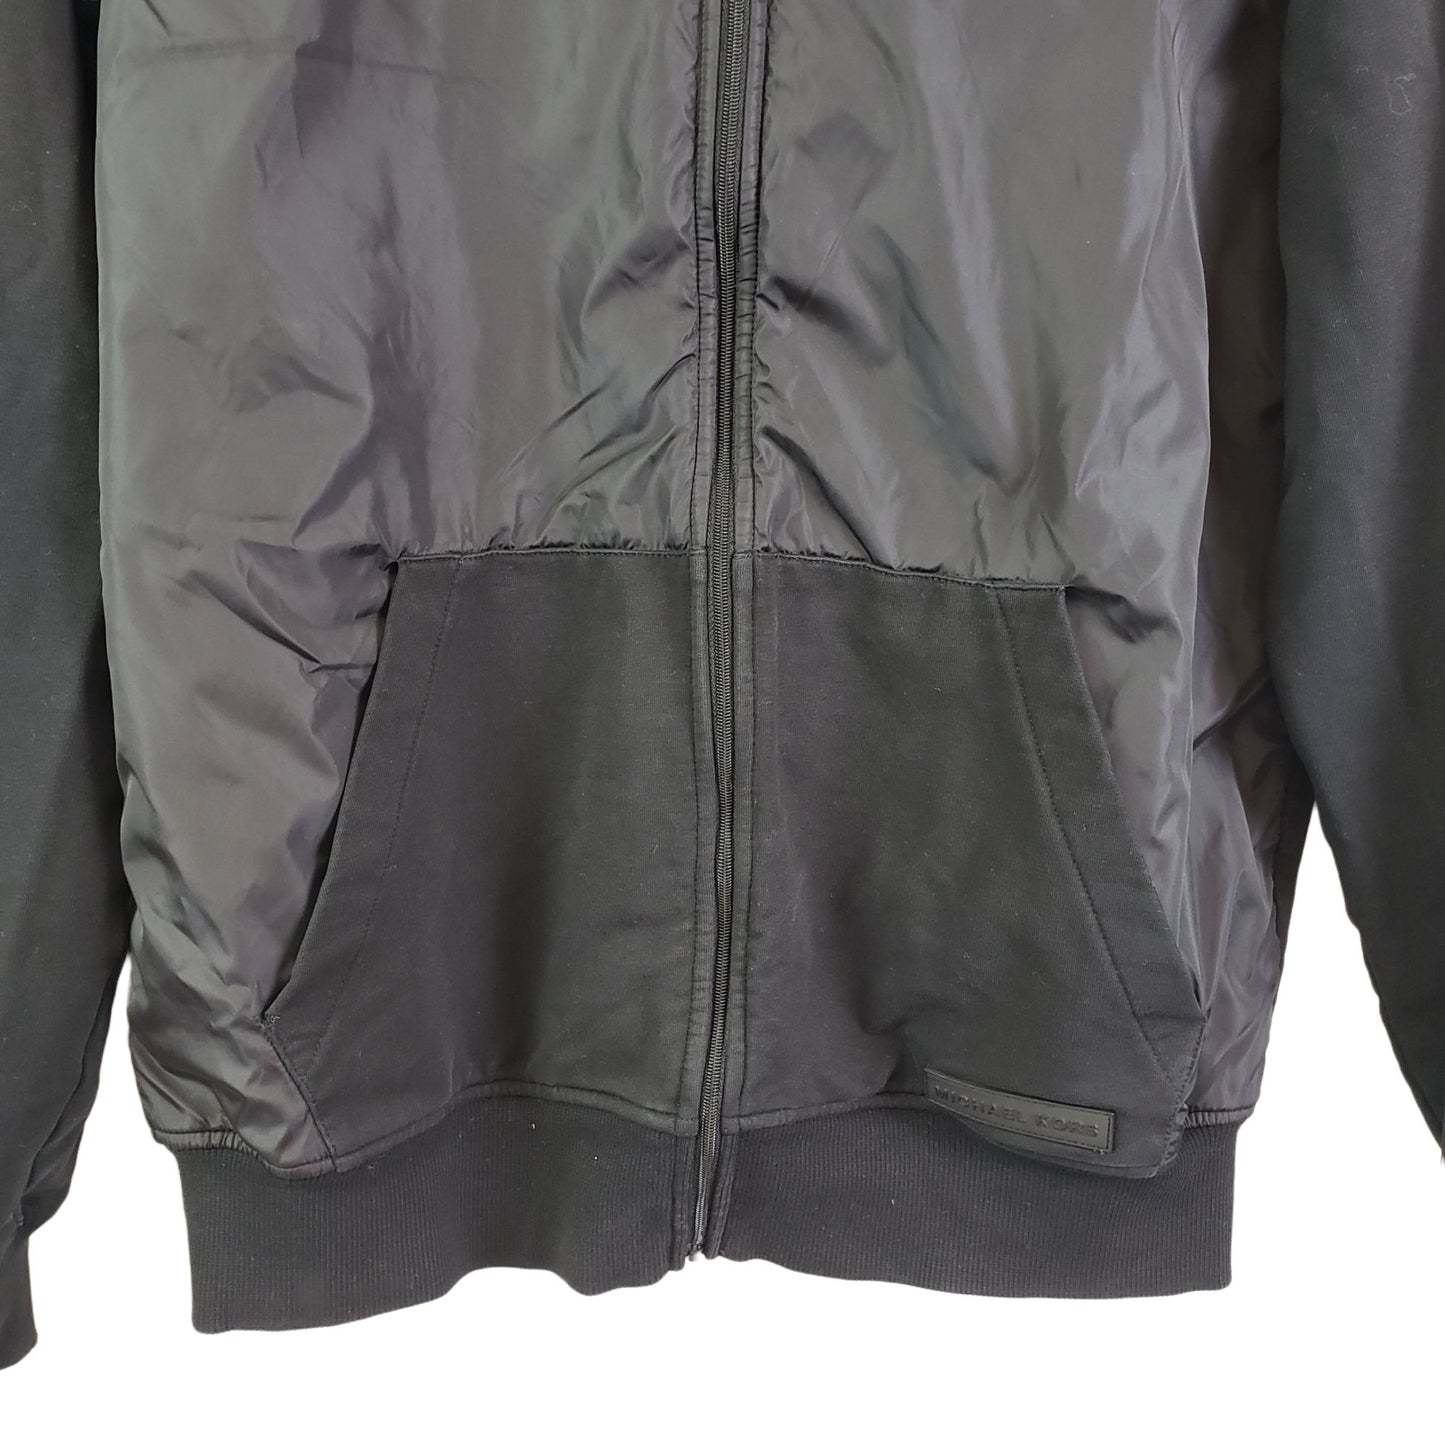 Michael Kors Mixed Media Zip Front Bomber Jacket Size Medium